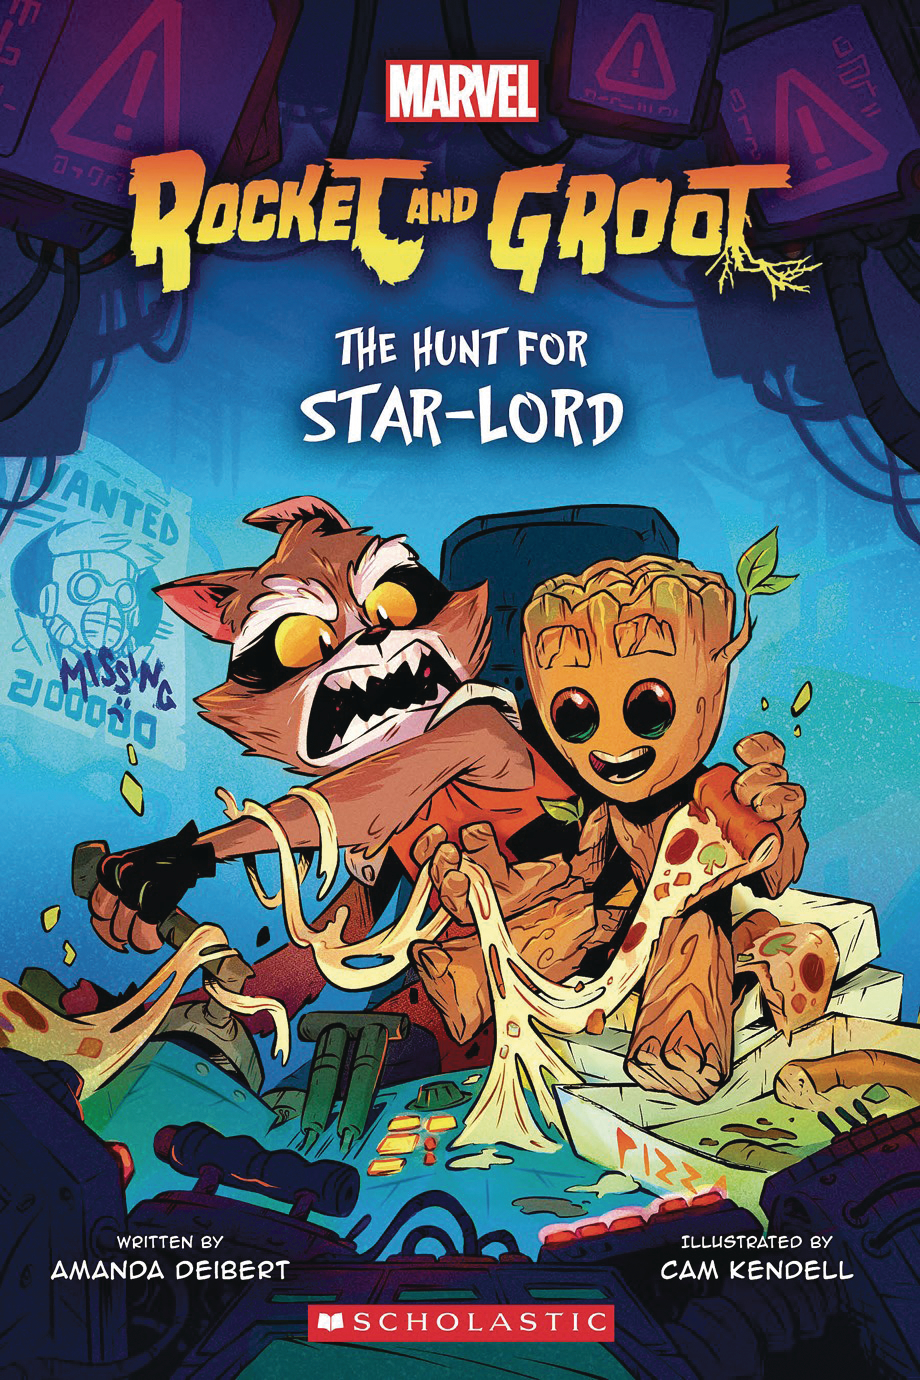 Marvels Rocket & Groot Graphic Novel Hunt for Star Lord